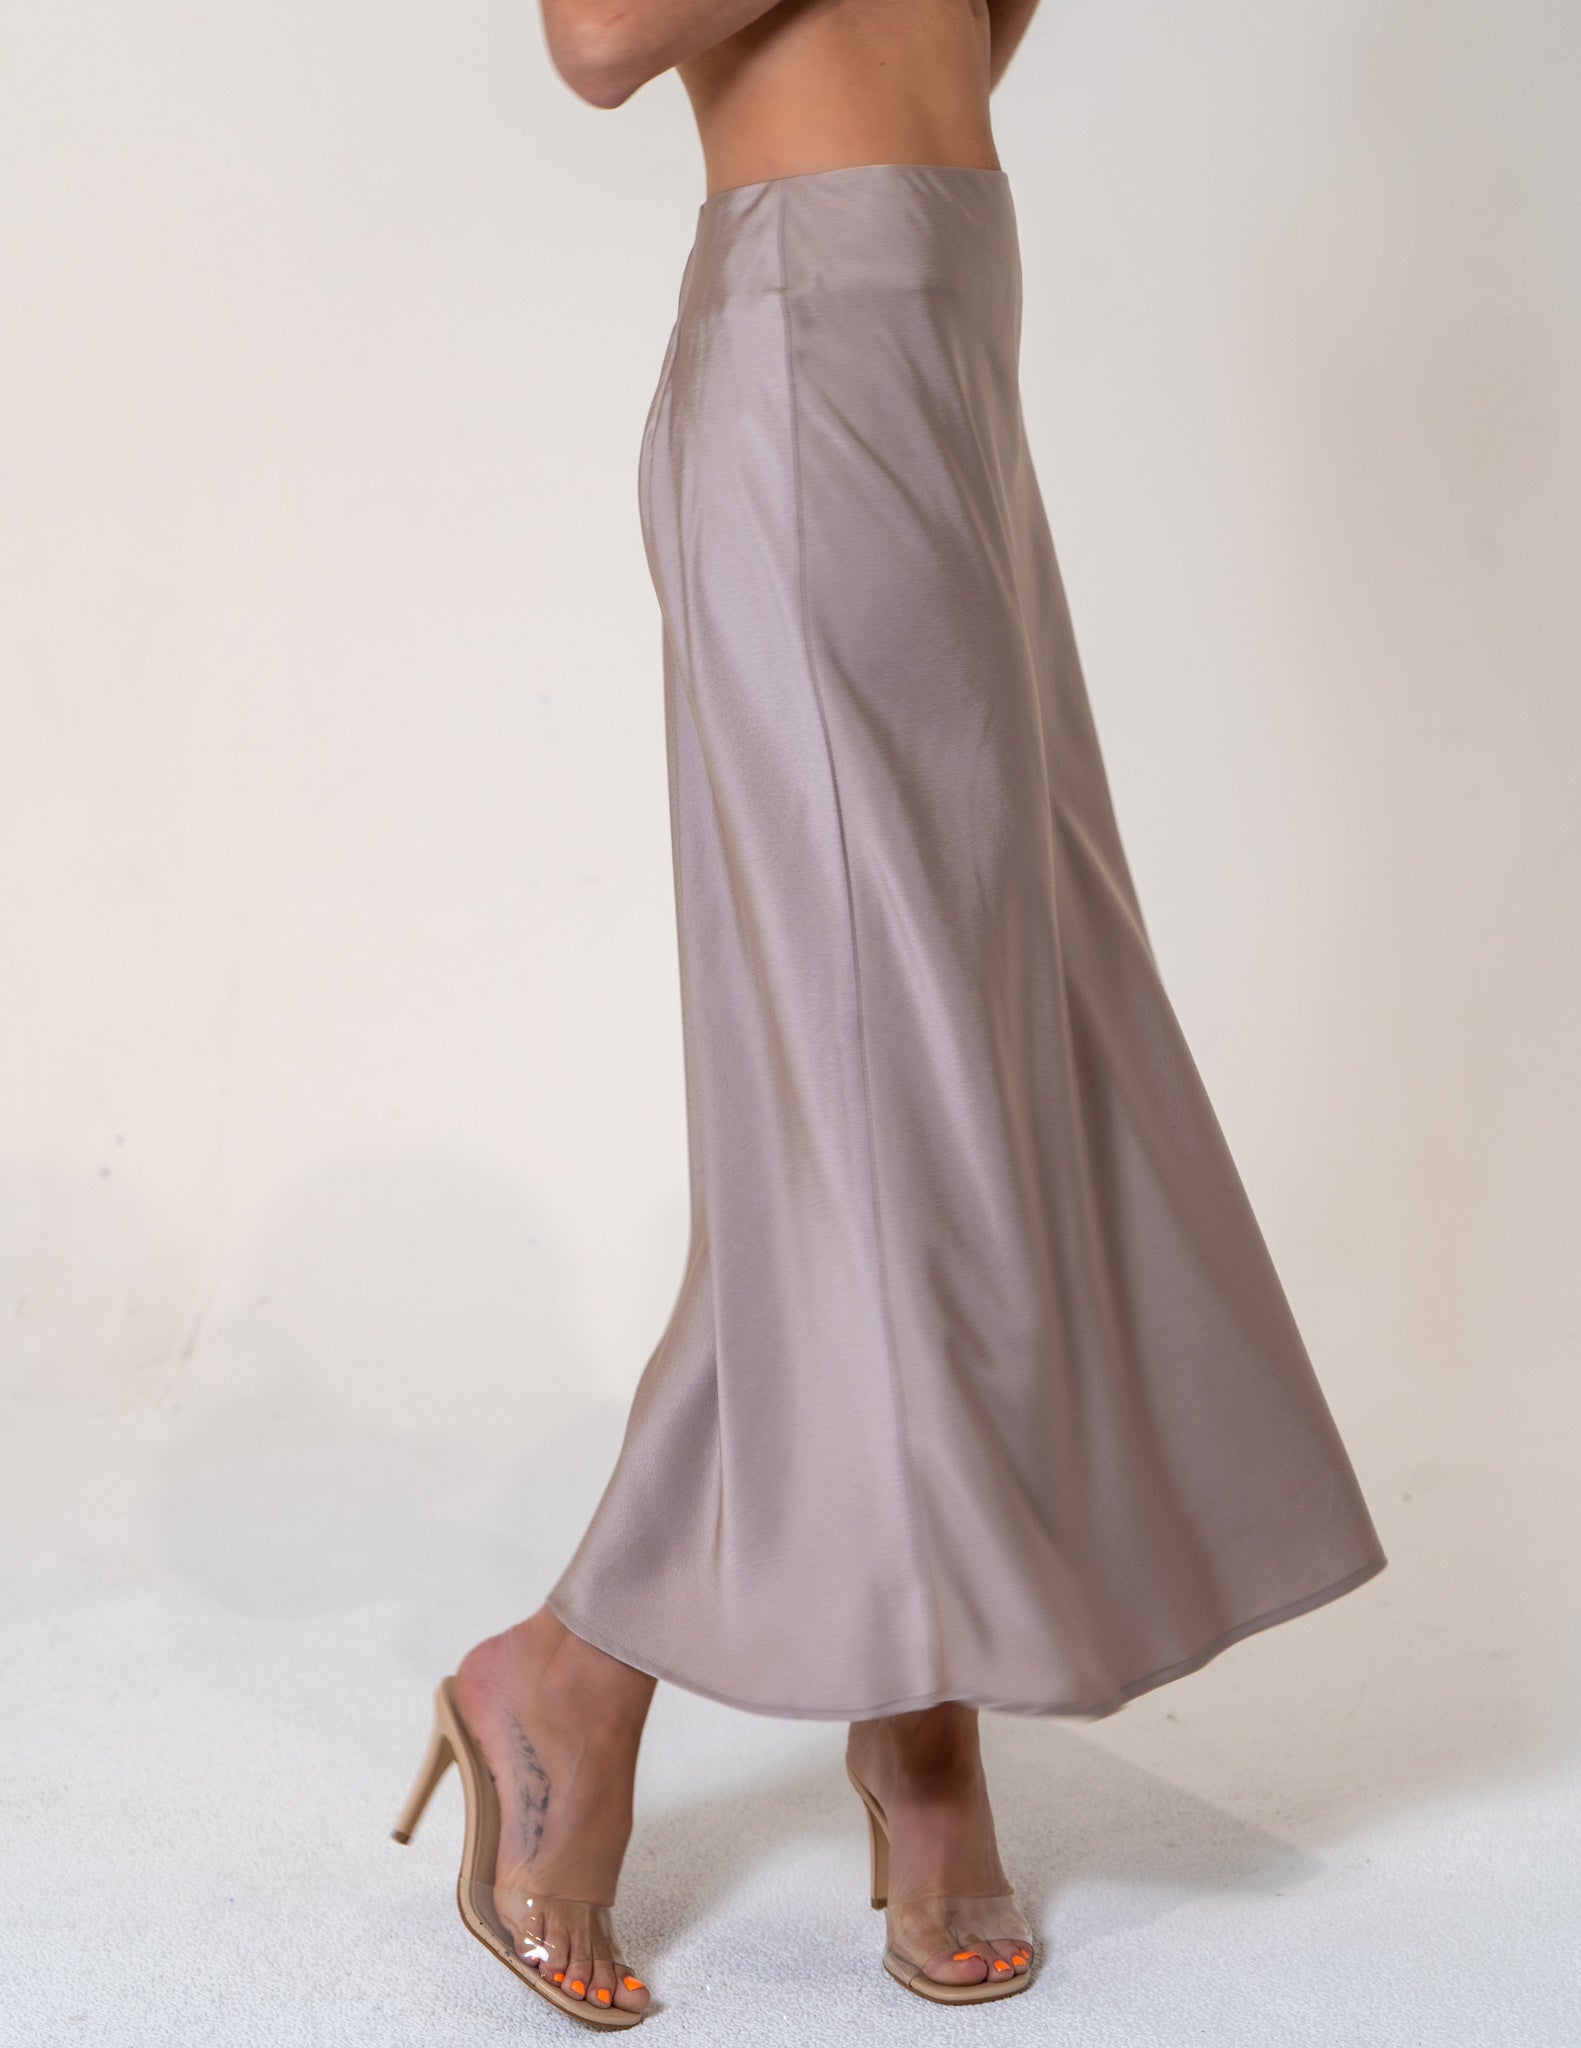 The Classic Satin Midi Skirt